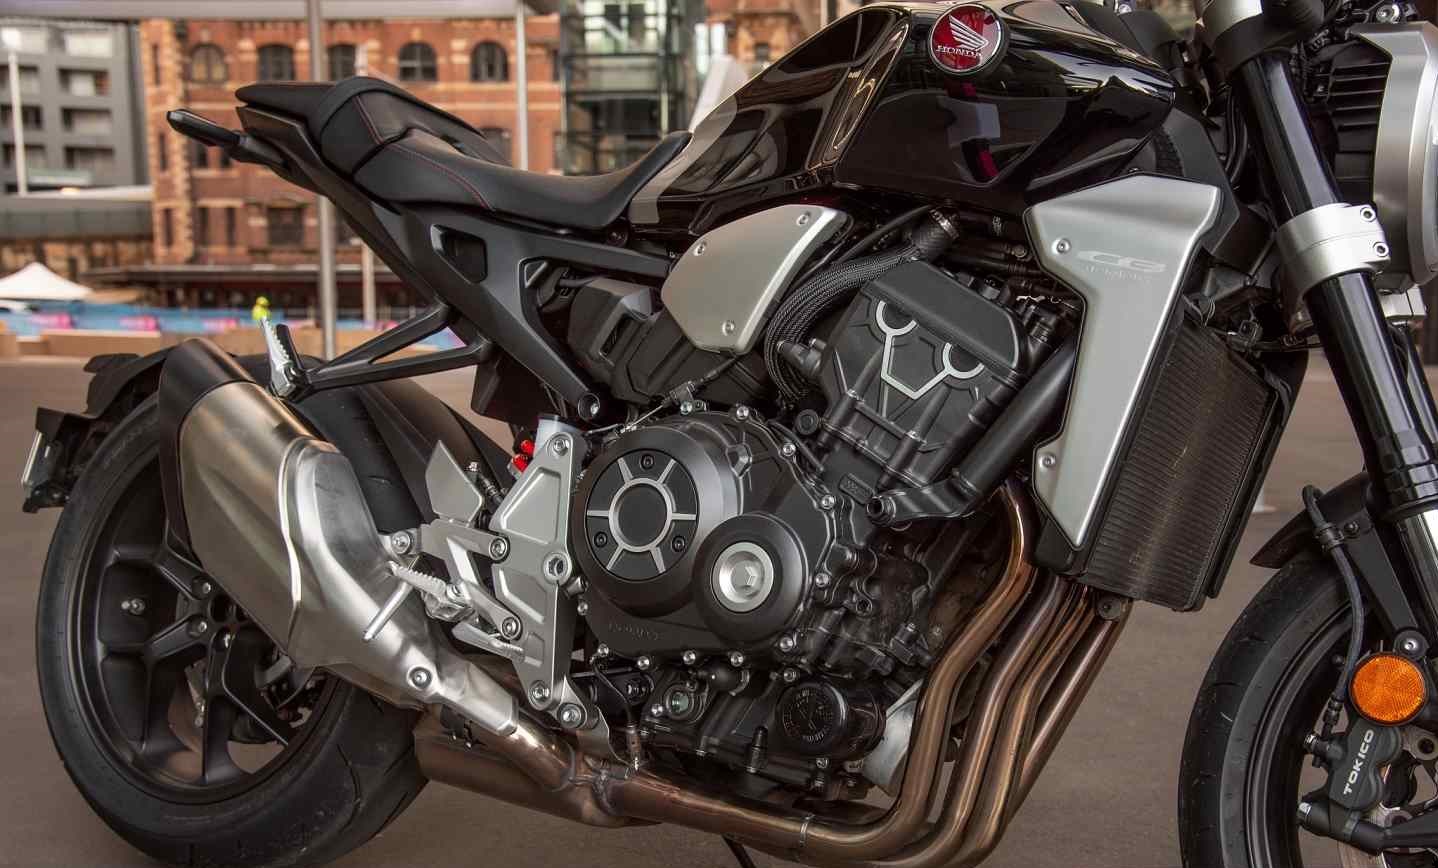 Honda CB1000R (2018-2021) Review, Speed, Specs & Prices